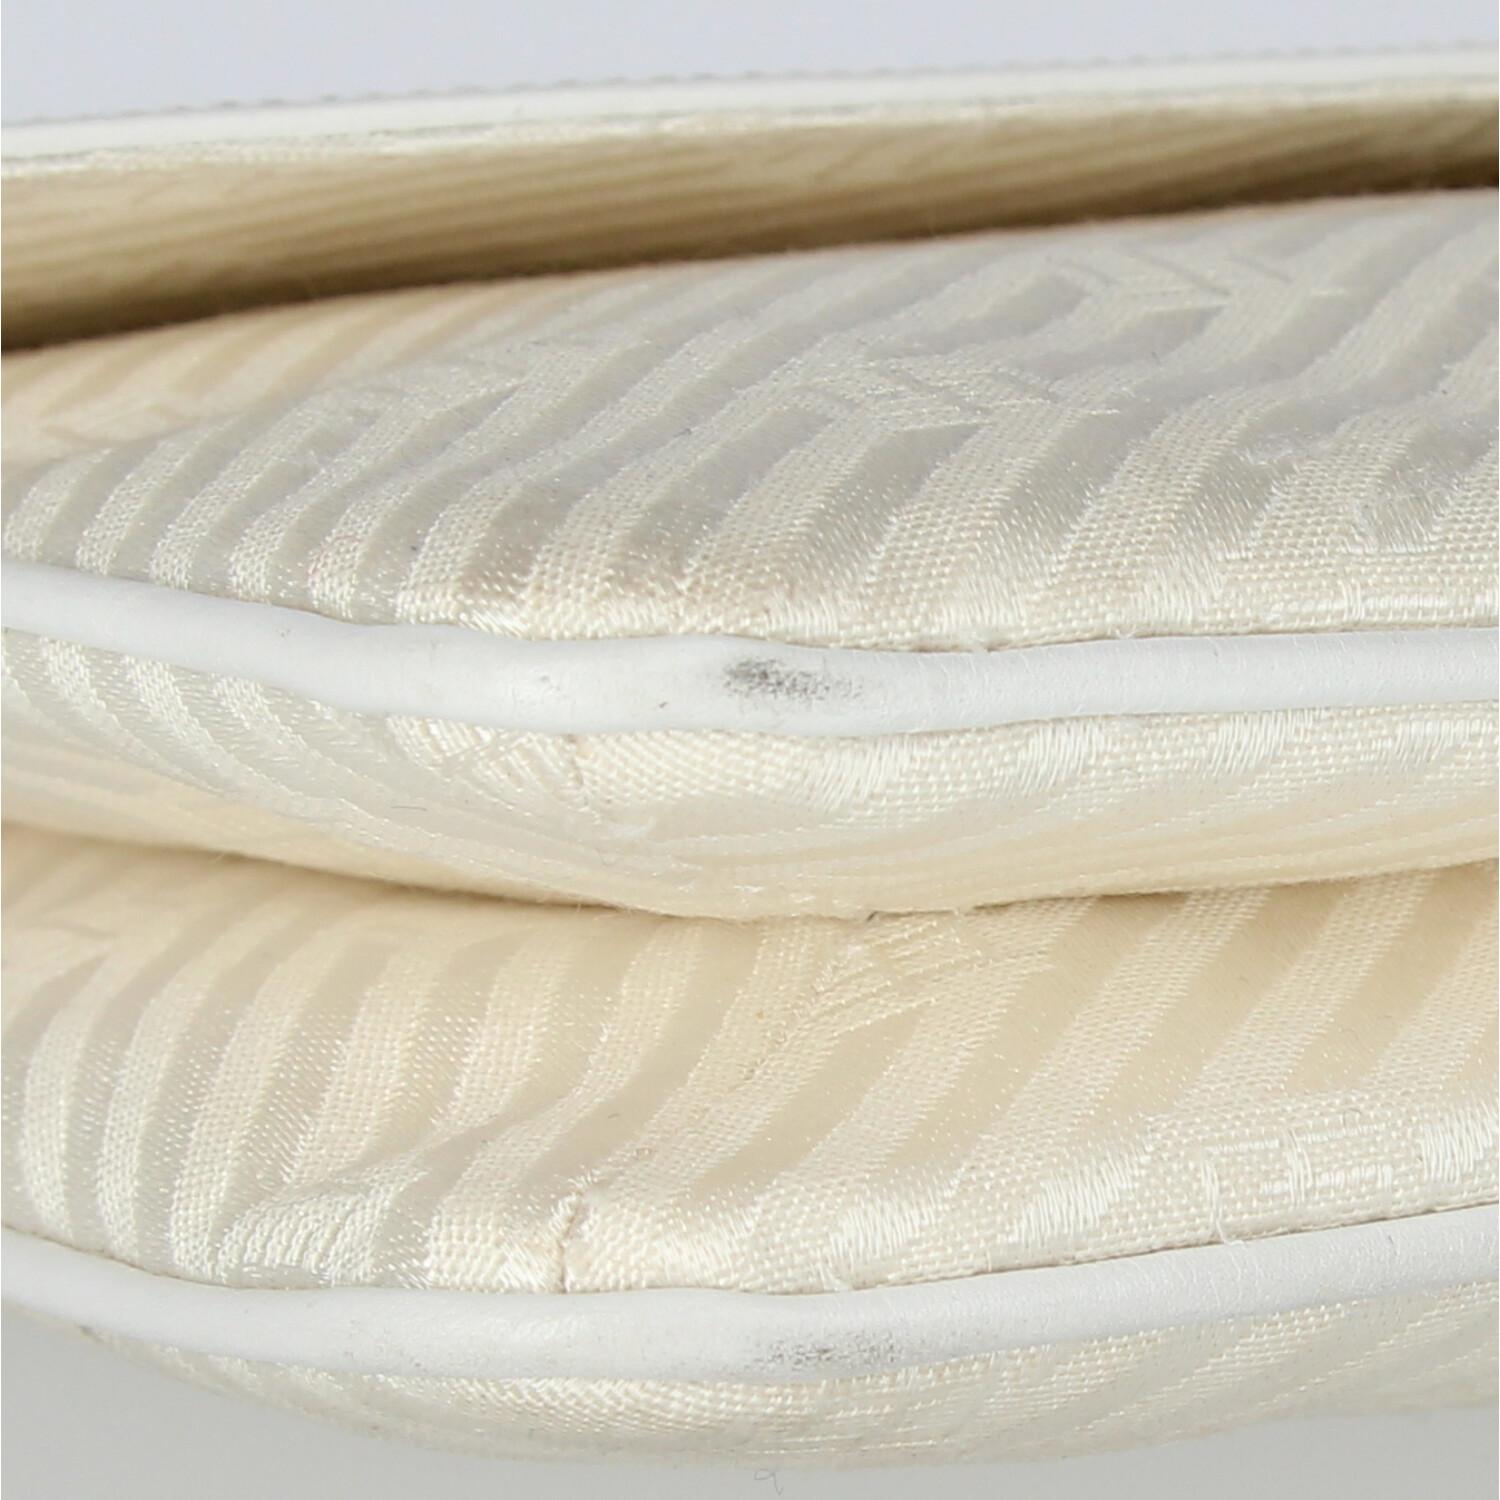 1980s Emilio Pucci white jacquard fabric shoulder bag For Sale 4